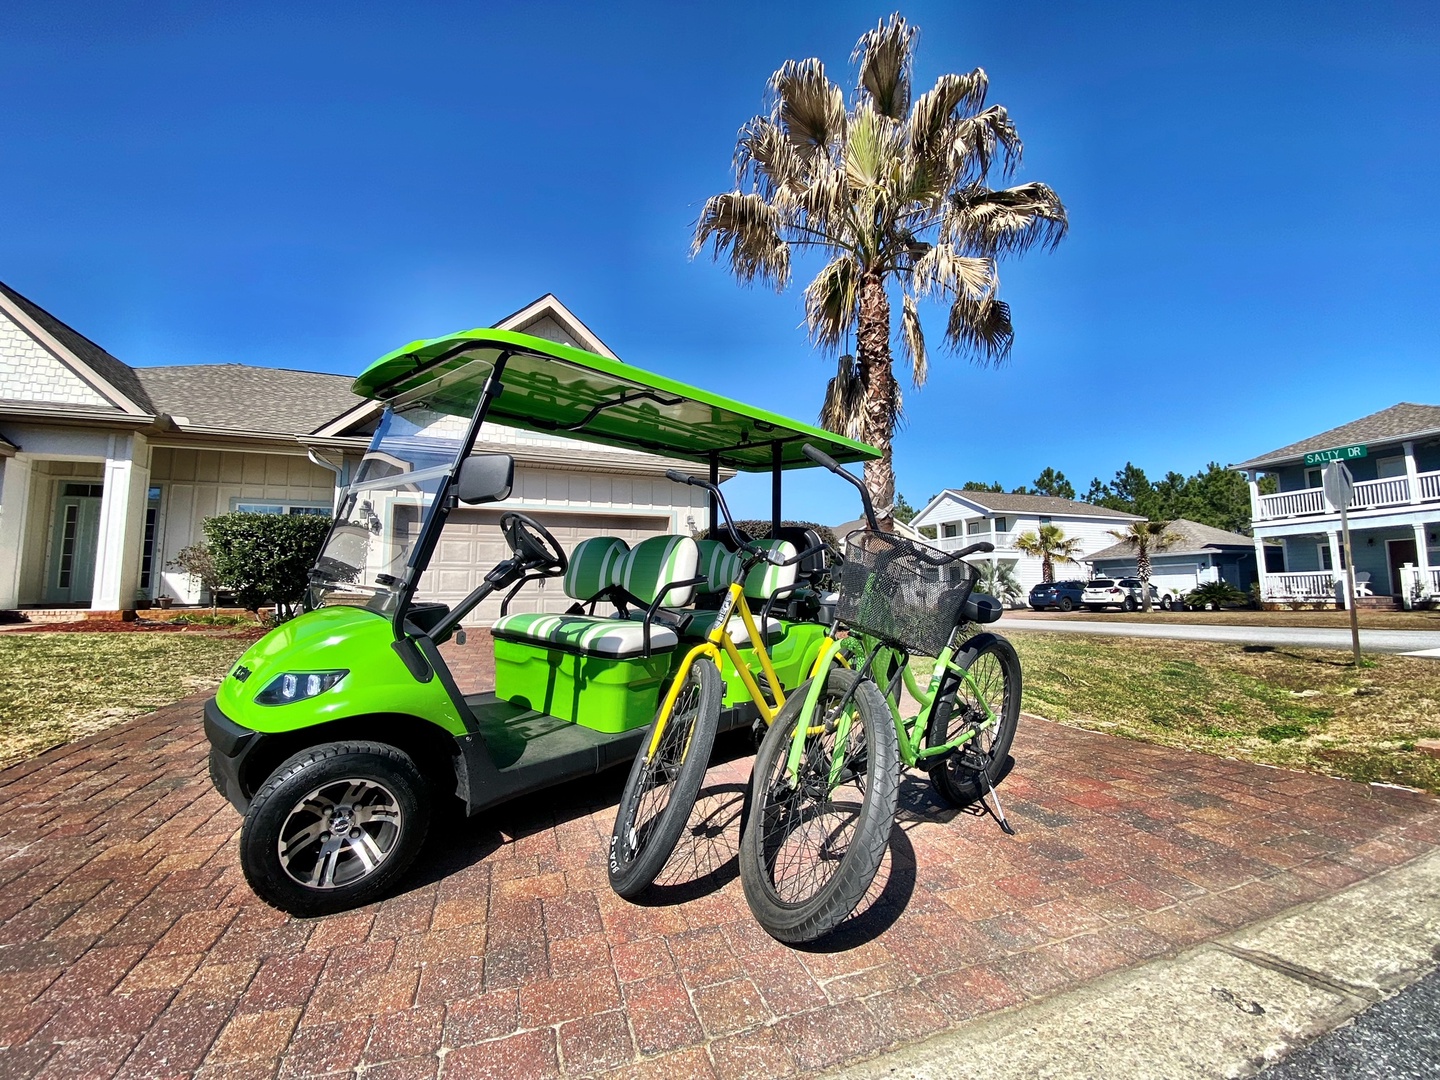 Explore the area via golf cart or on bikes!